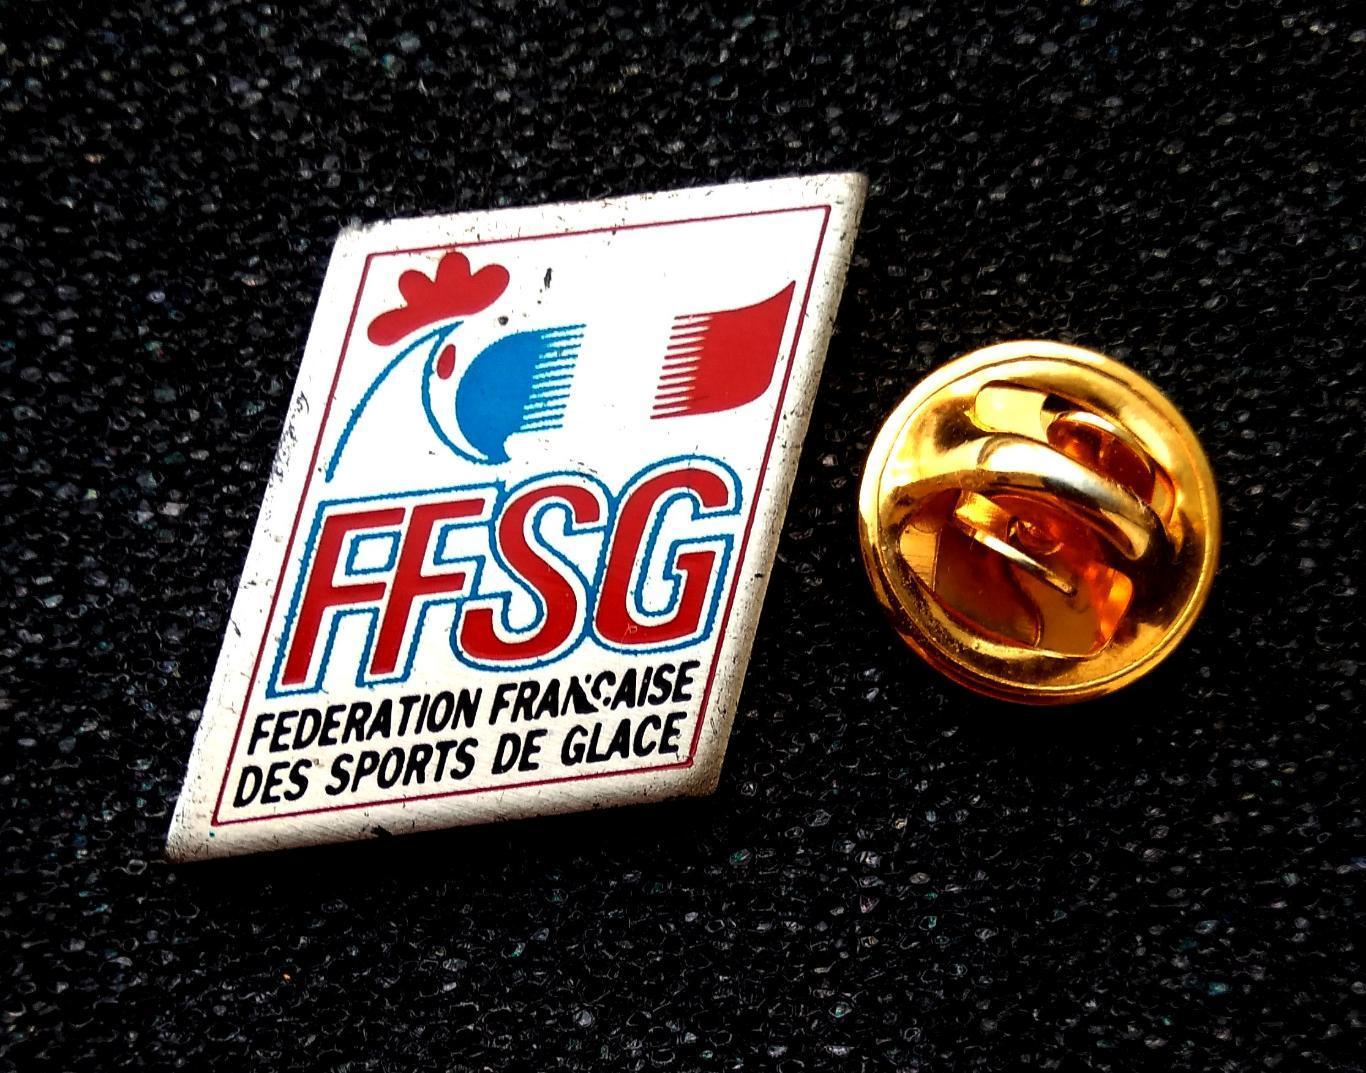 Хоккей. Федерация - Federation Francaise des Sports de Glace - ФРАНЦИЯ.